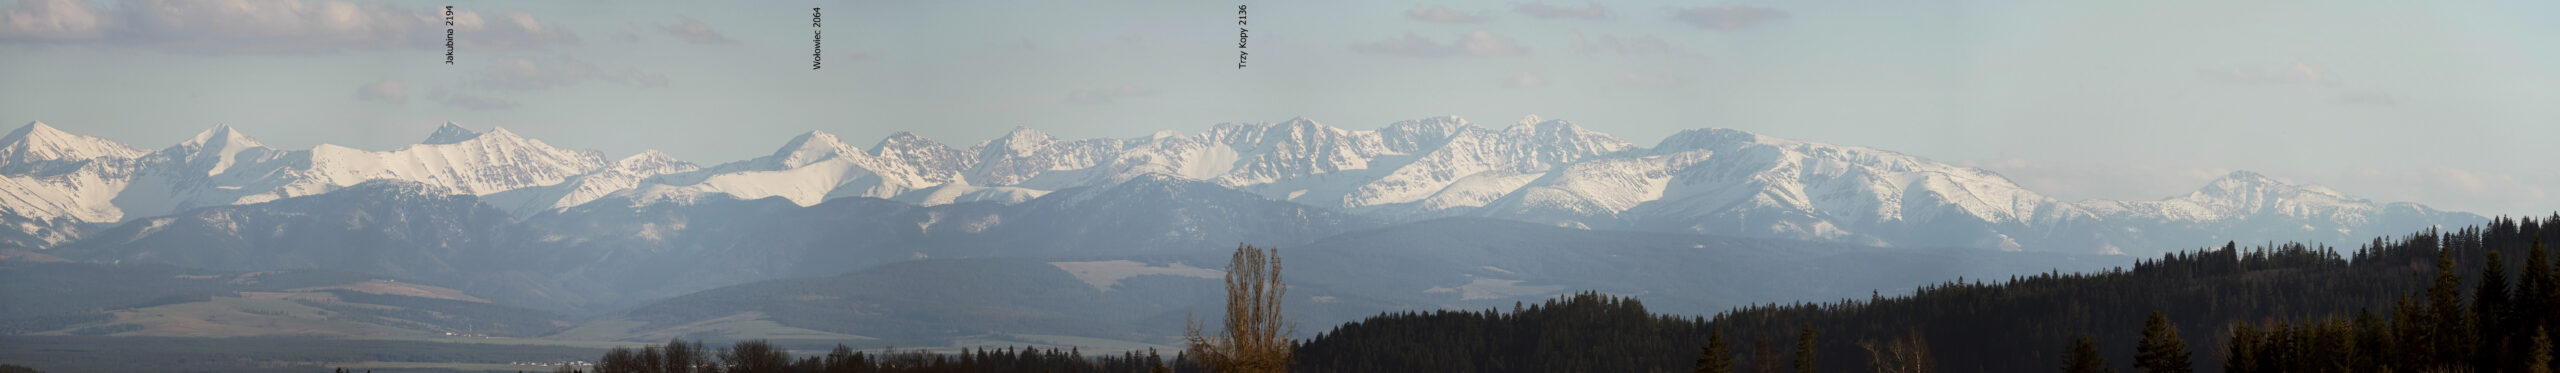 Majufka-2021-04-30_120_panorama_2-scaled.jpeg